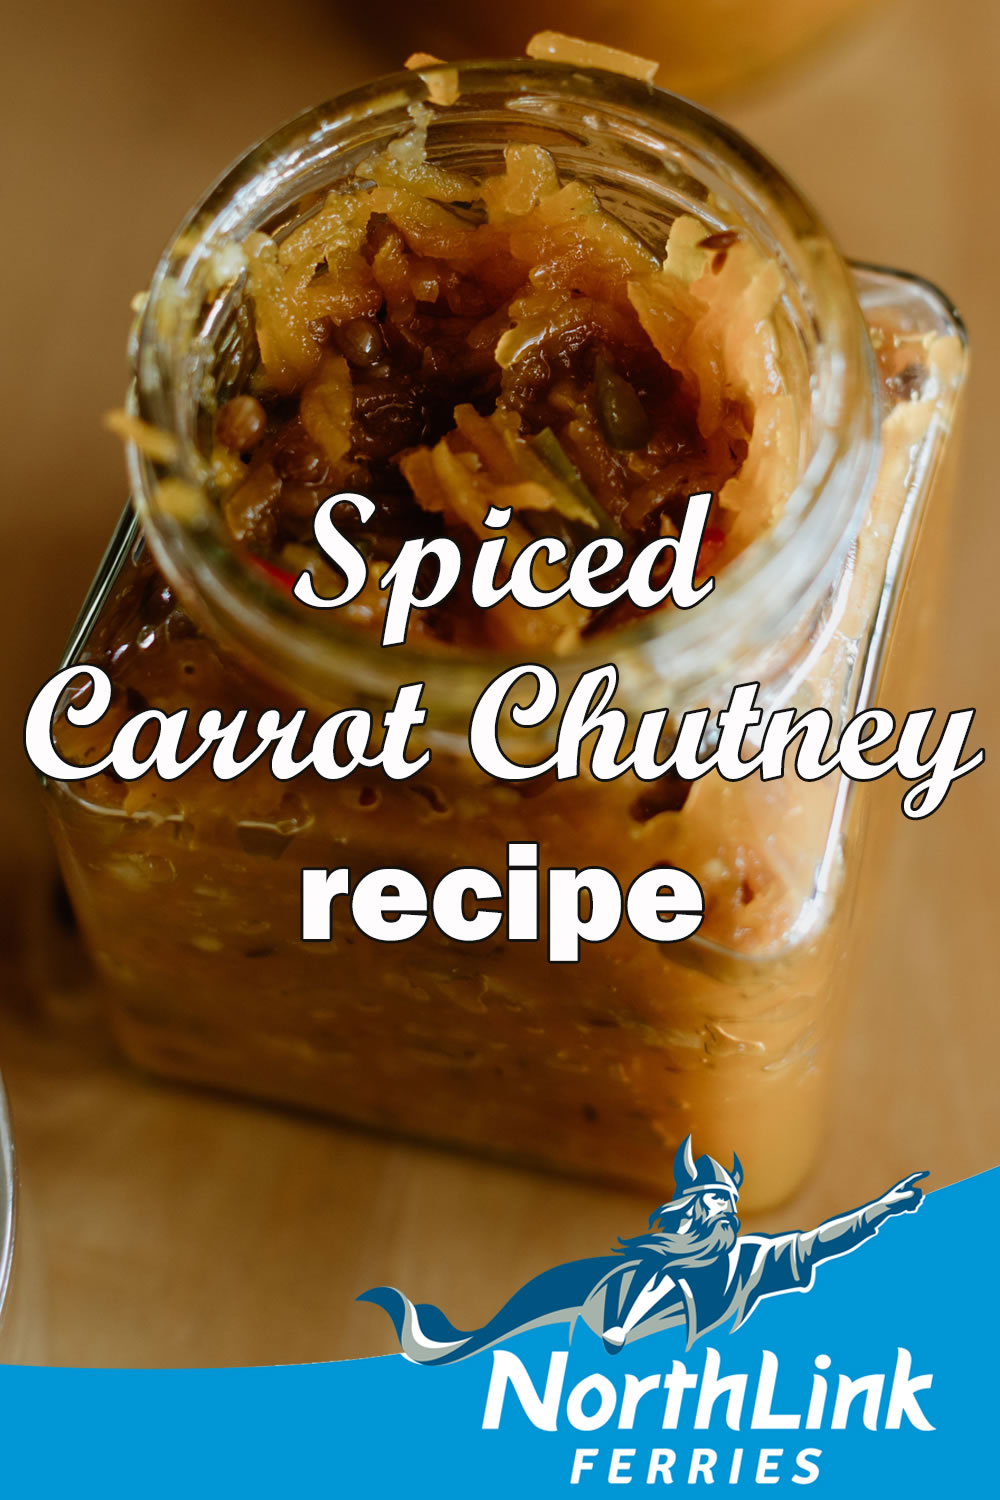 Spiced Carrot Chutney recipe